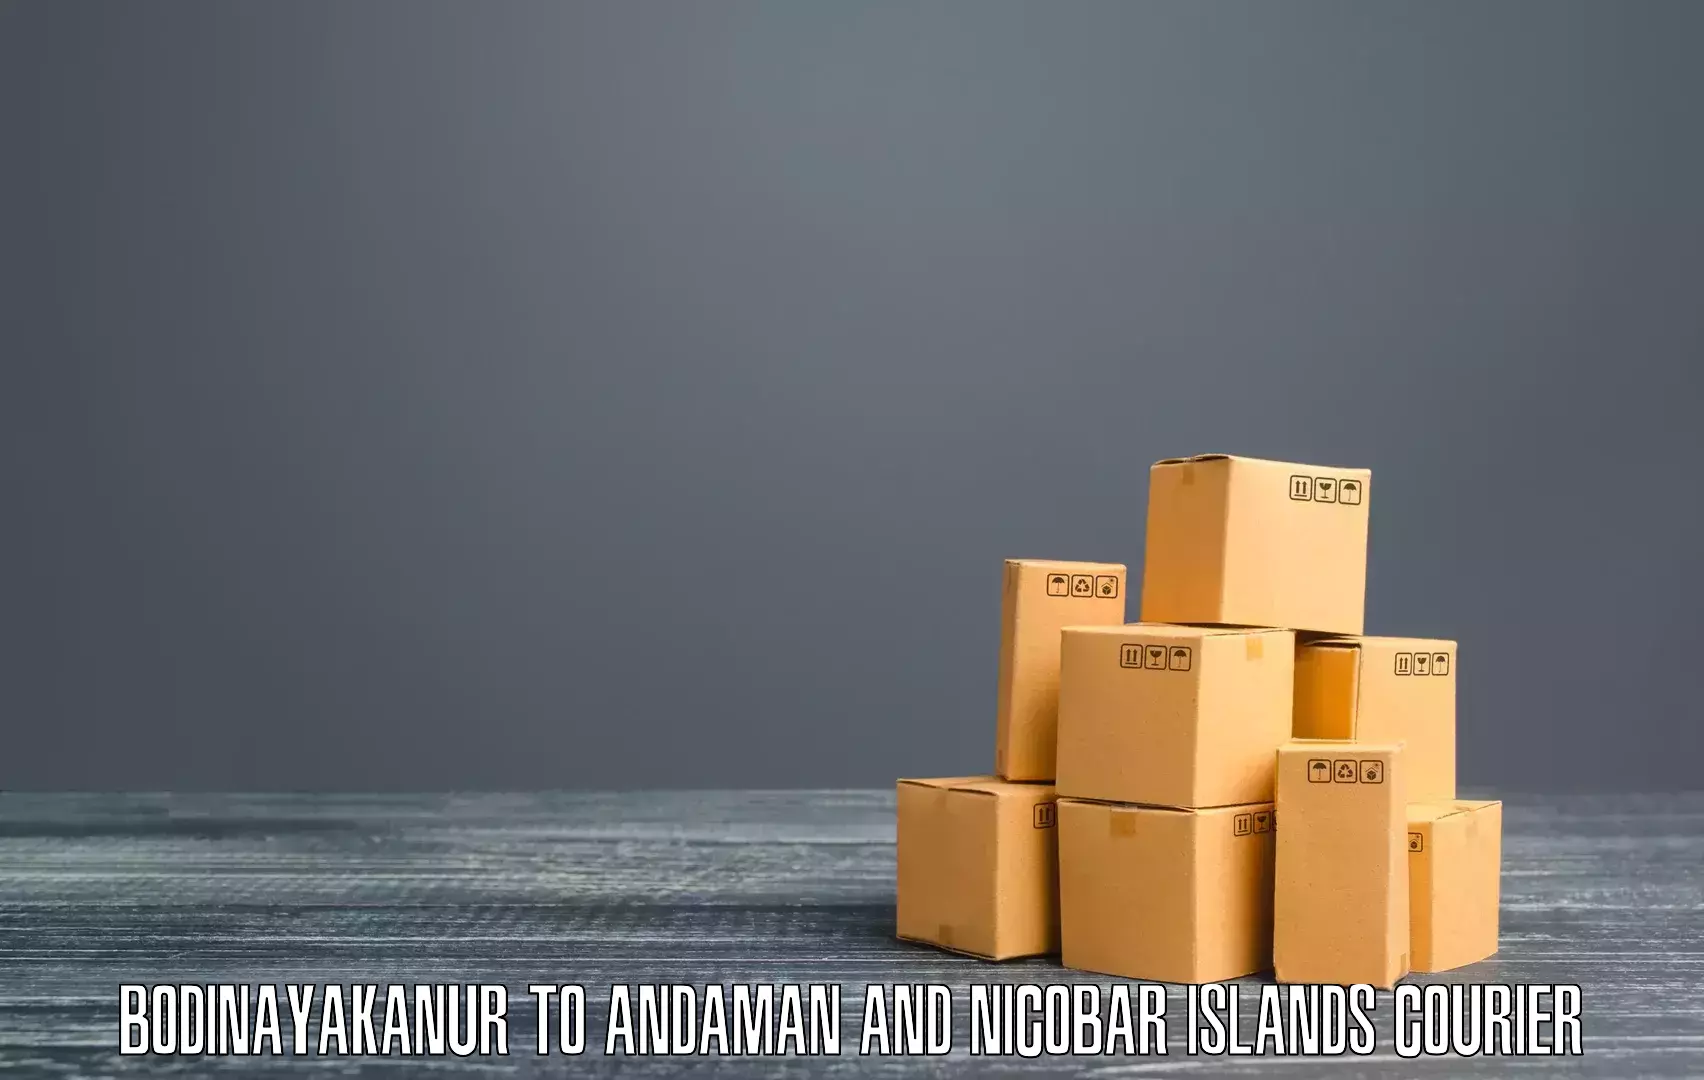 Comprehensive shipping network Bodinayakanur to Andaman and Nicobar Islands